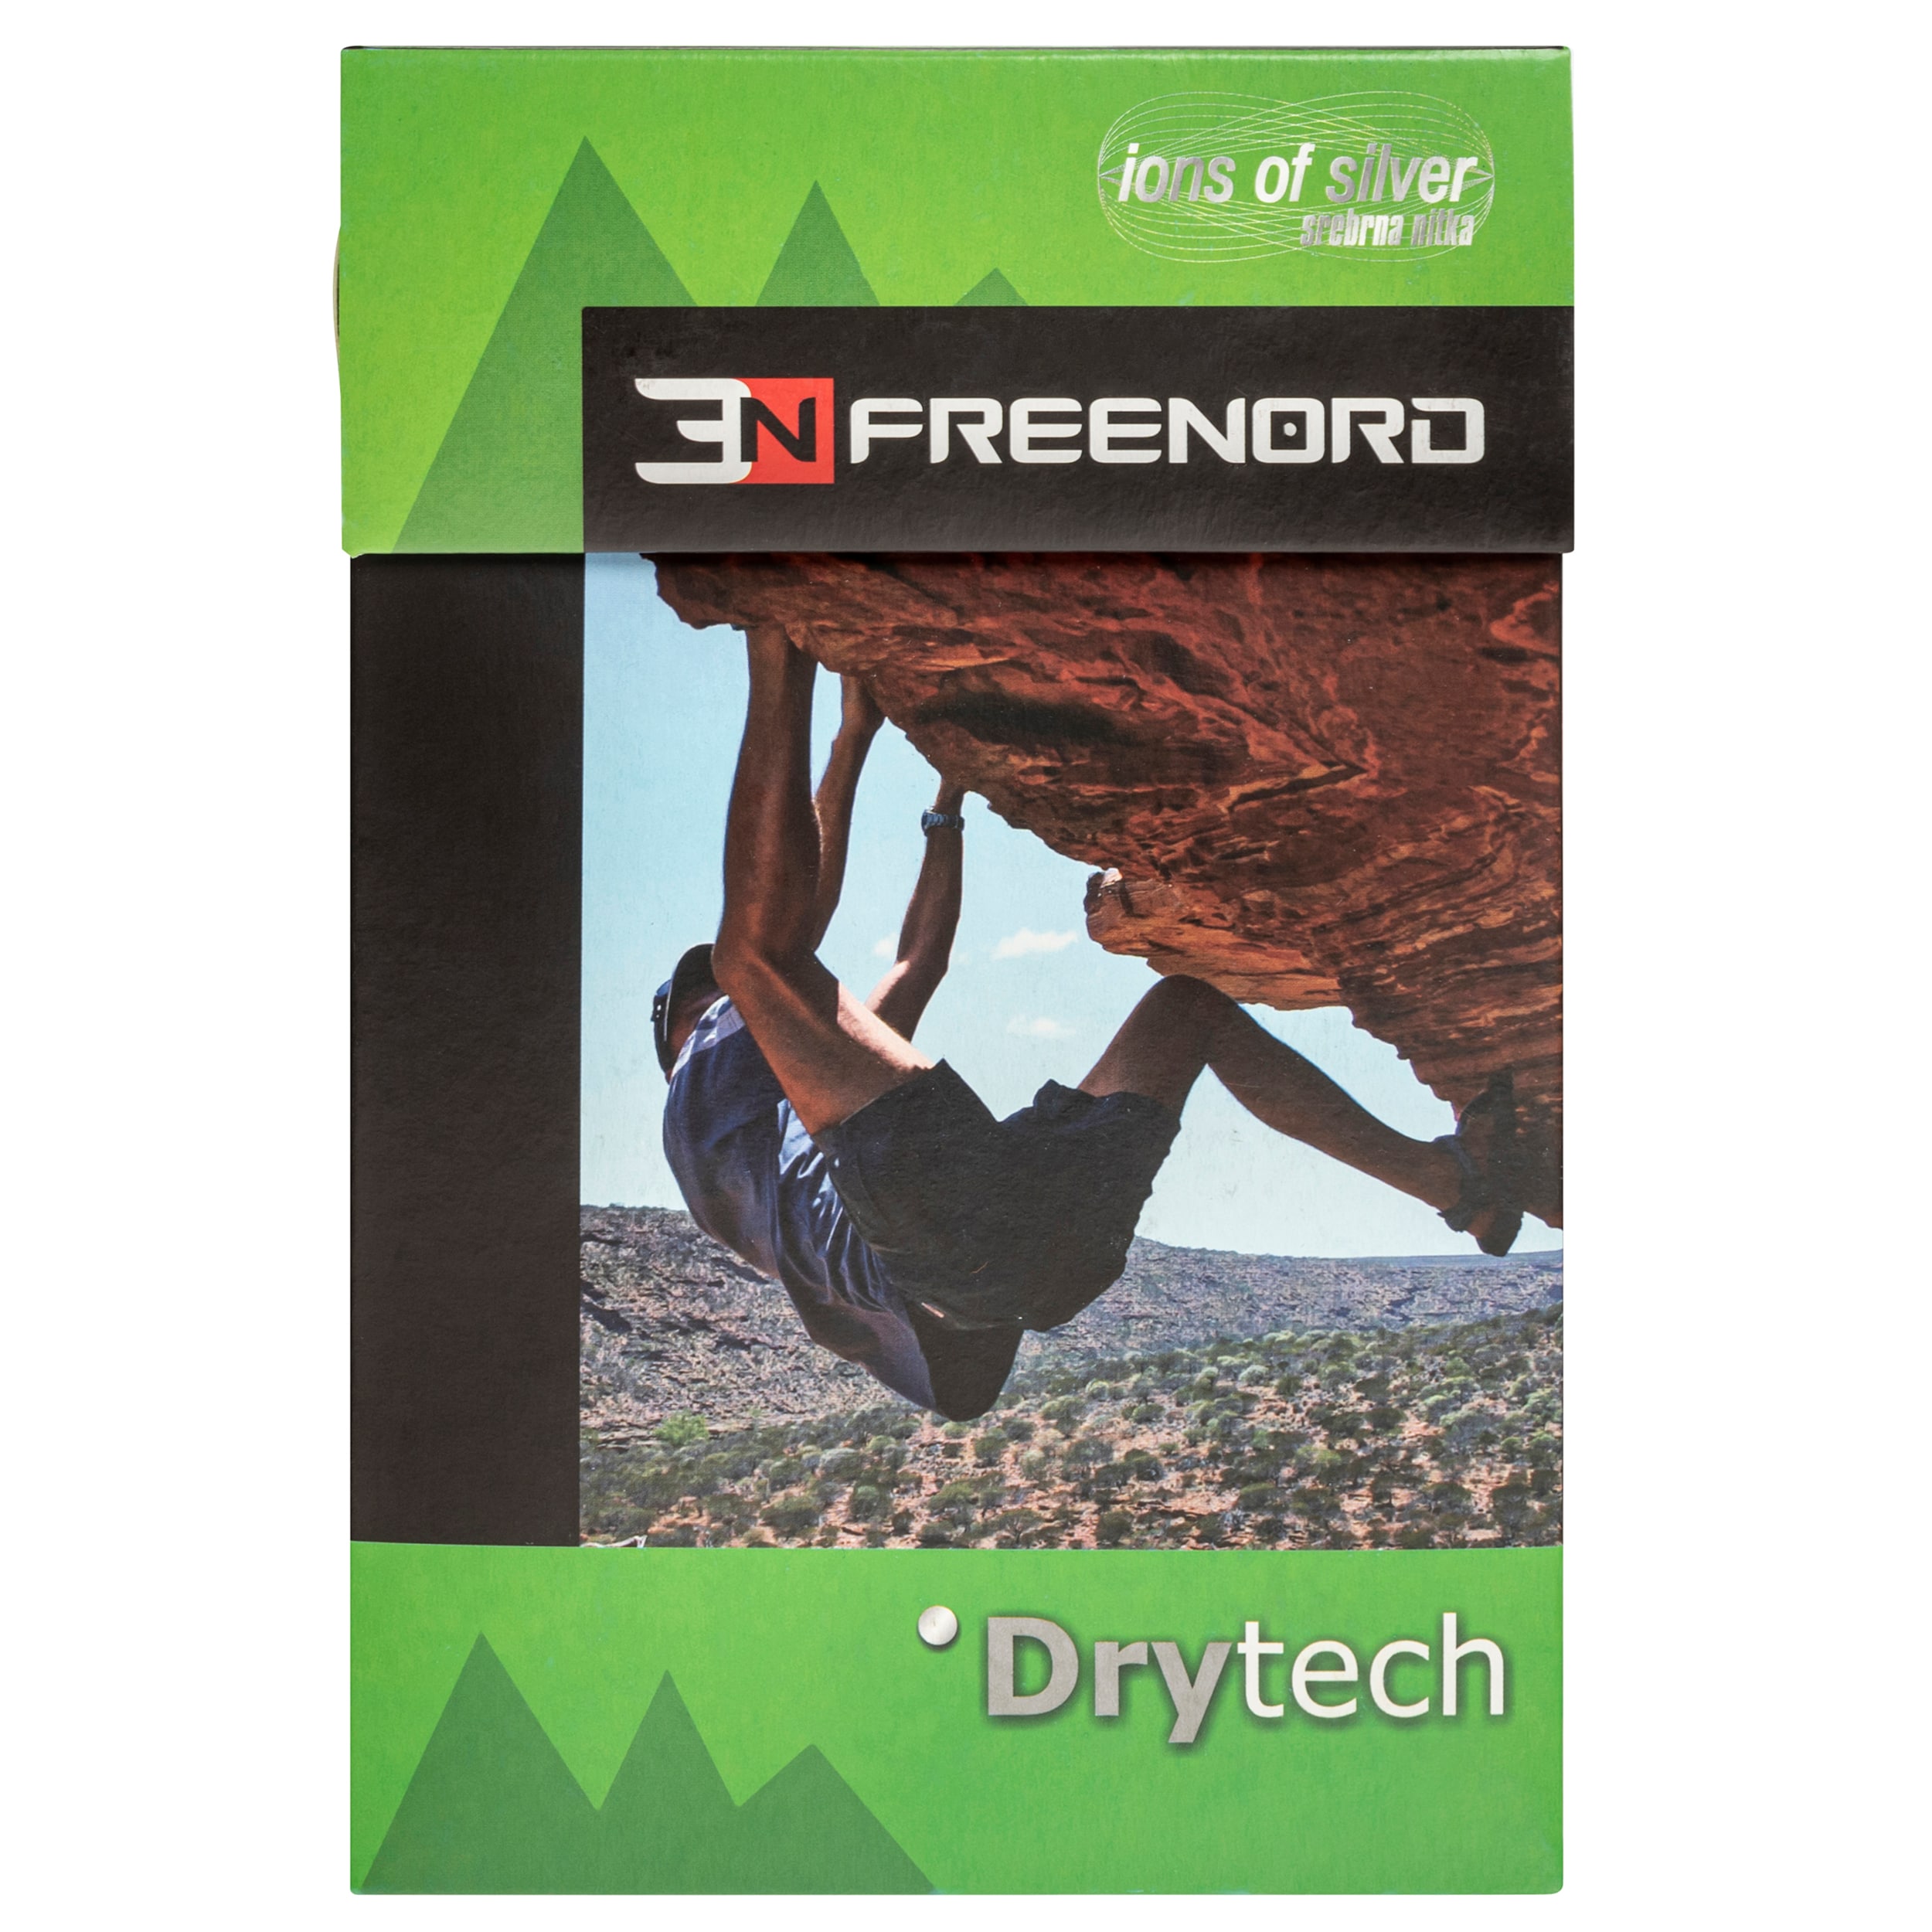 Термоактивна футболка FreeNord DryTech Short Sleeve - Black/Orange